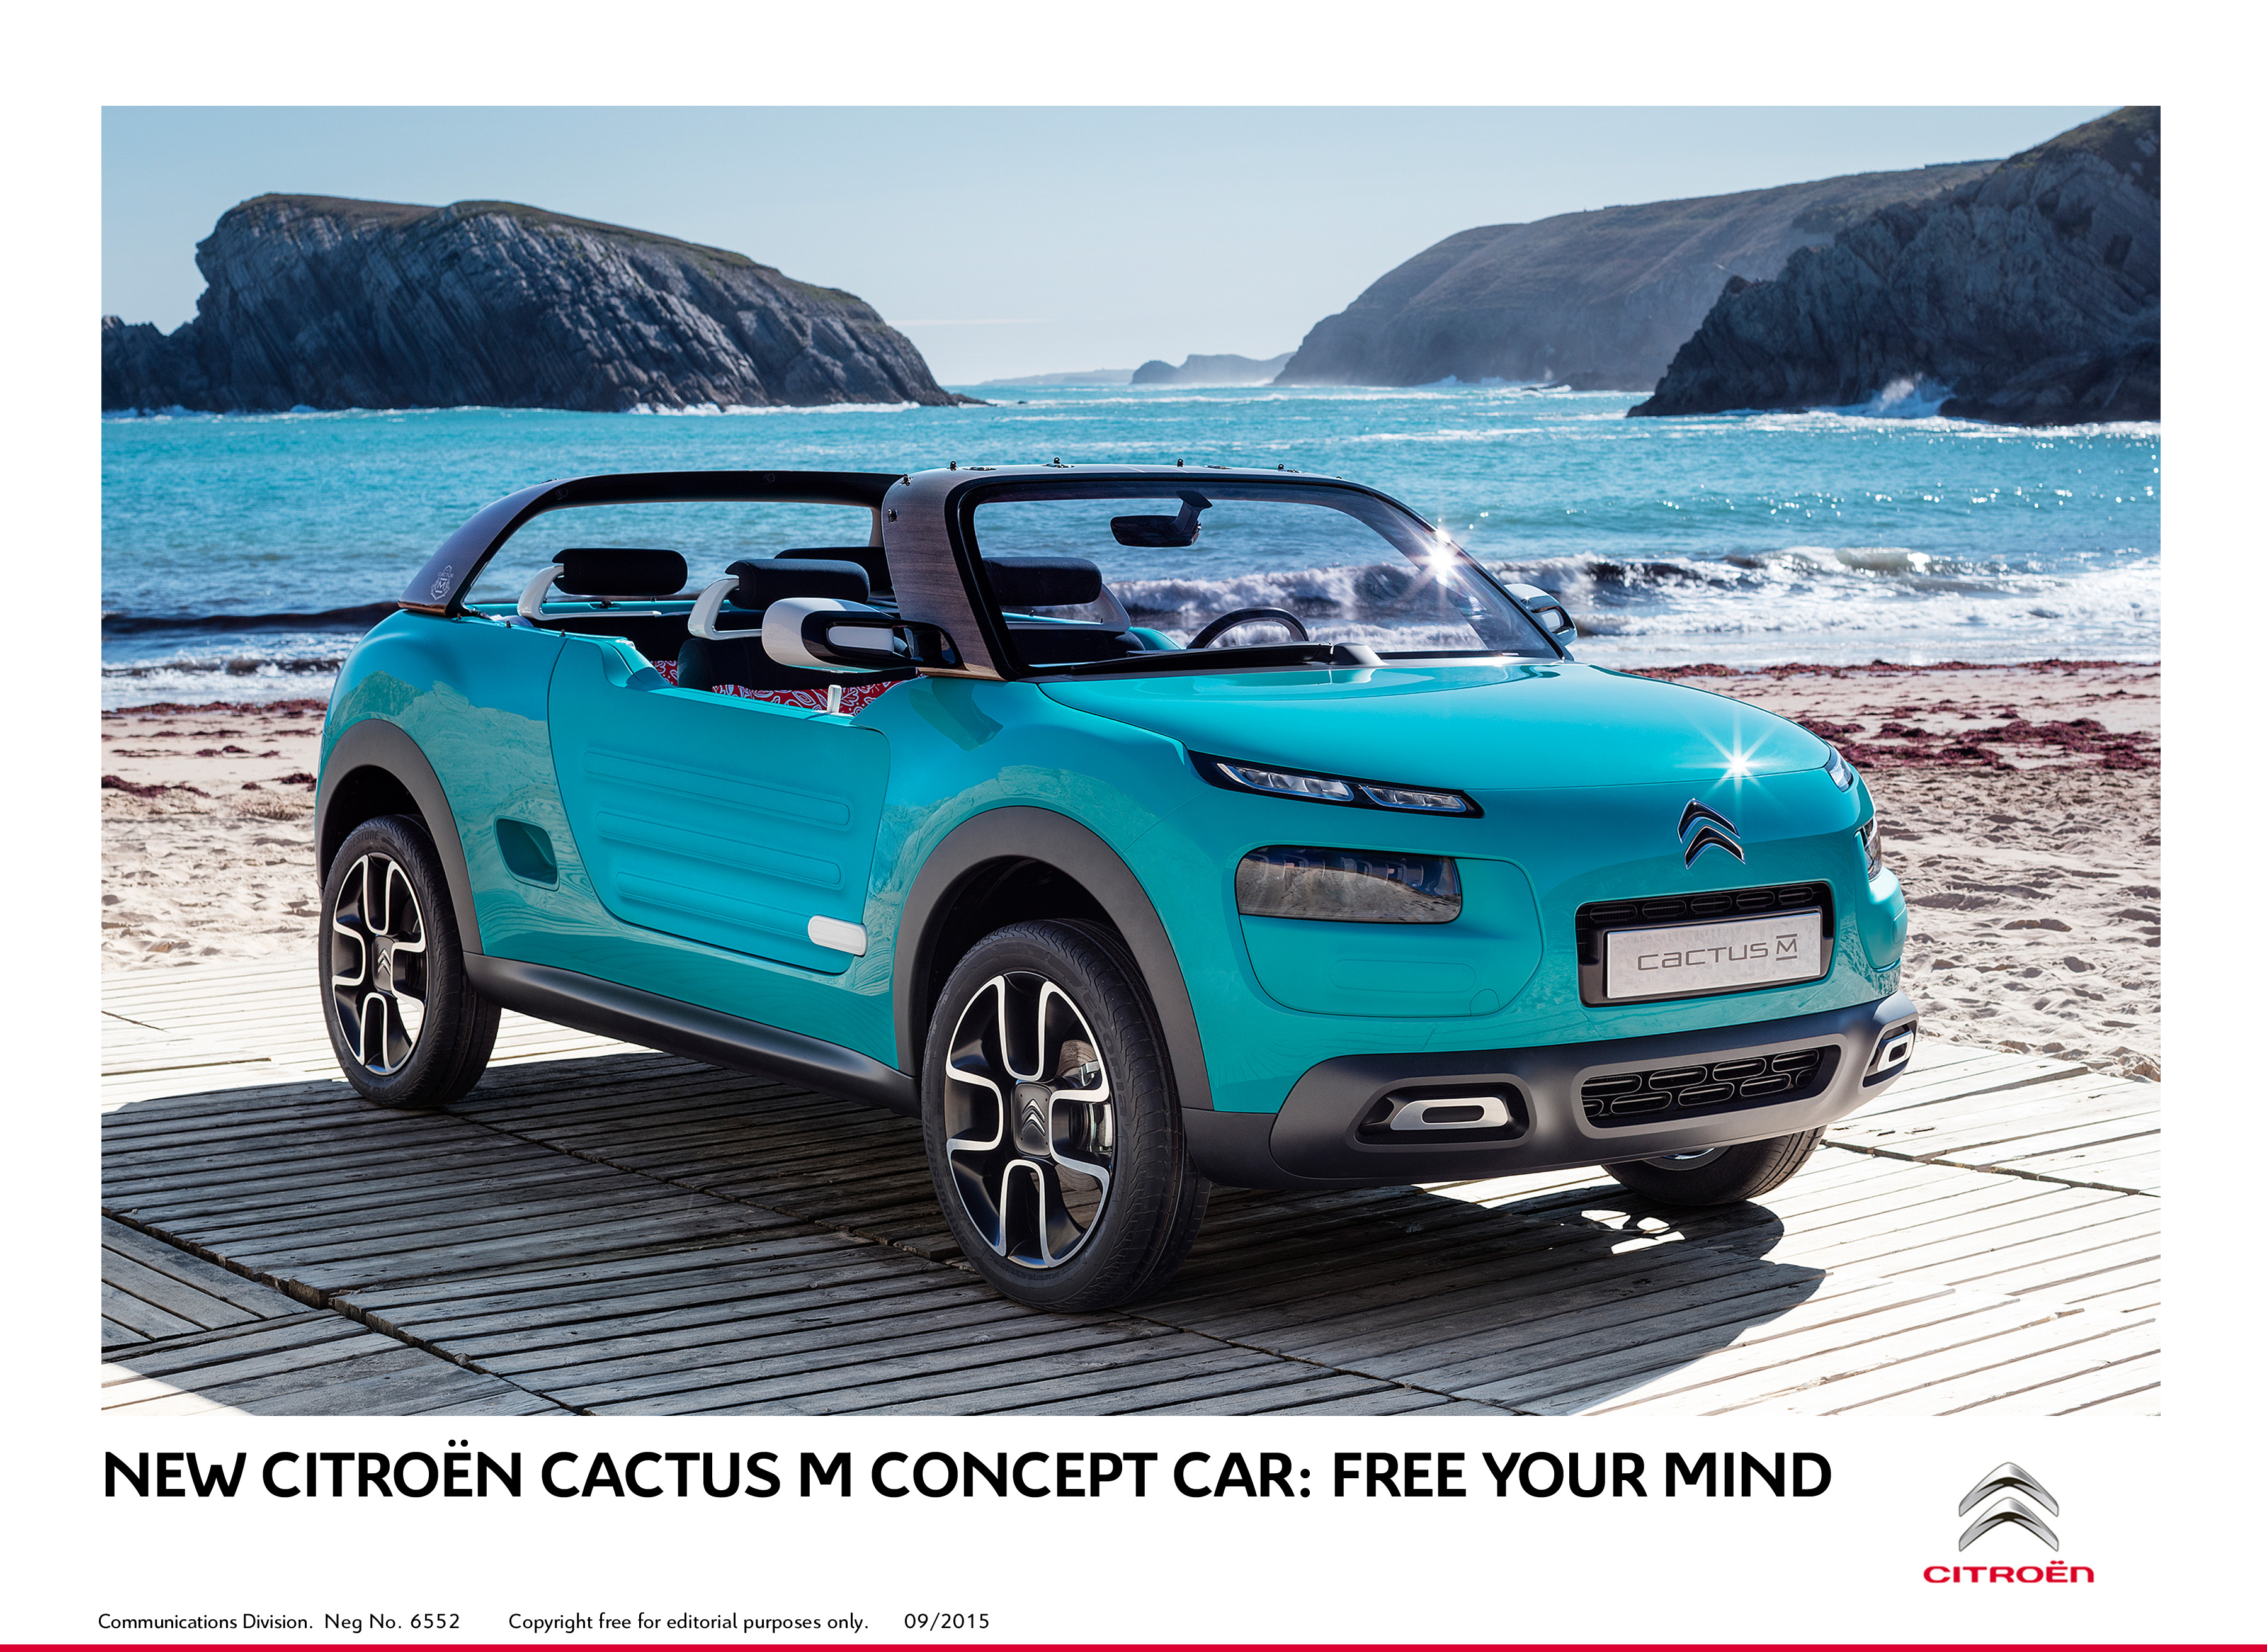 New Citroen Cactus M Concept Car Free Your Mind6